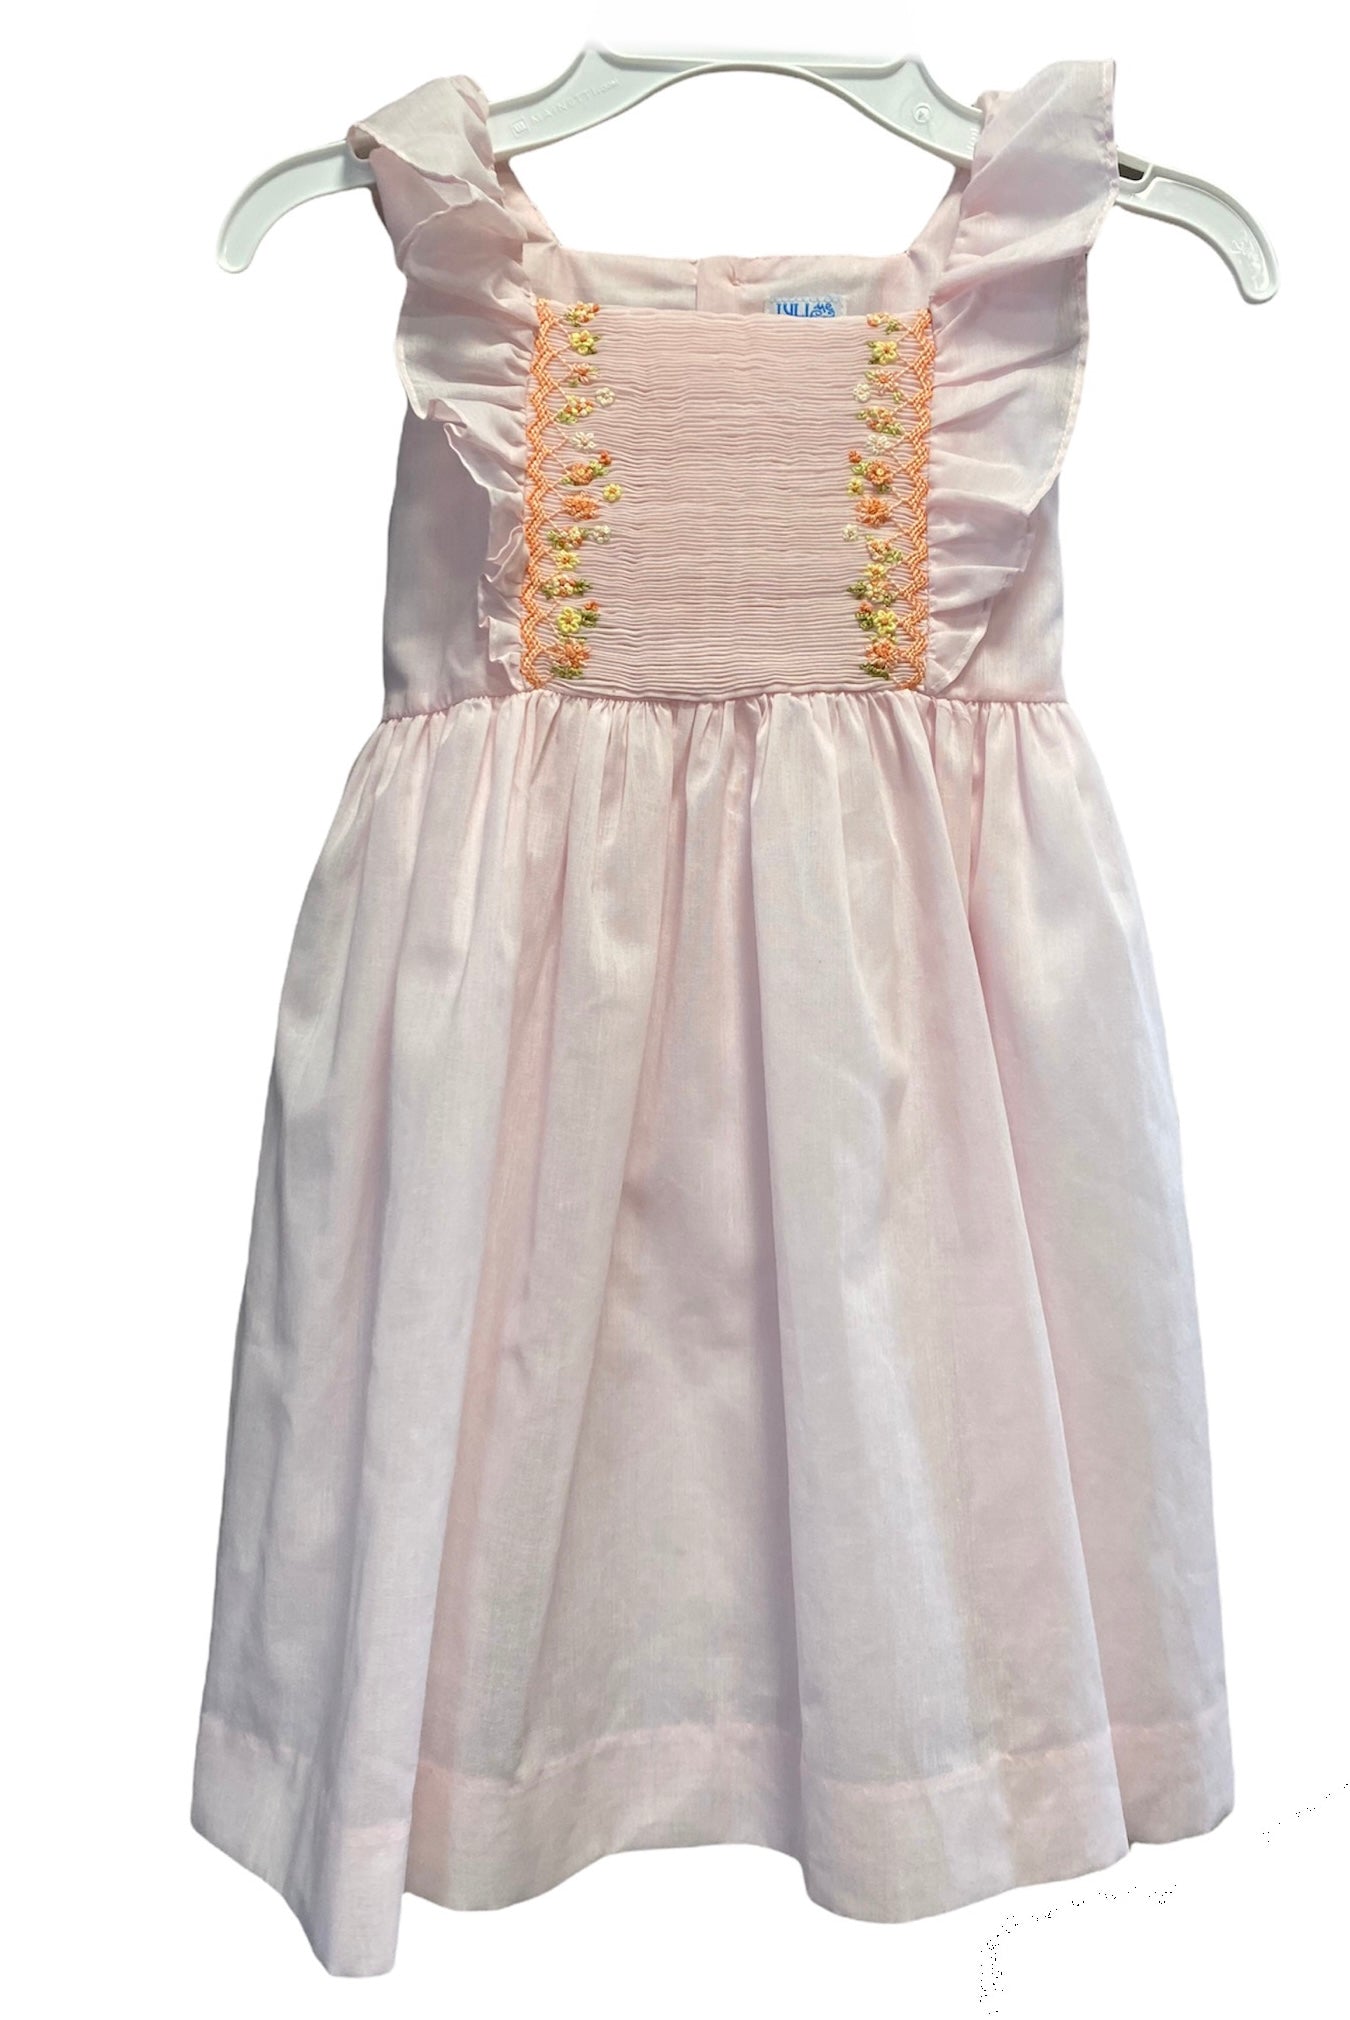 Pink Ruffle Square Neckline Dress